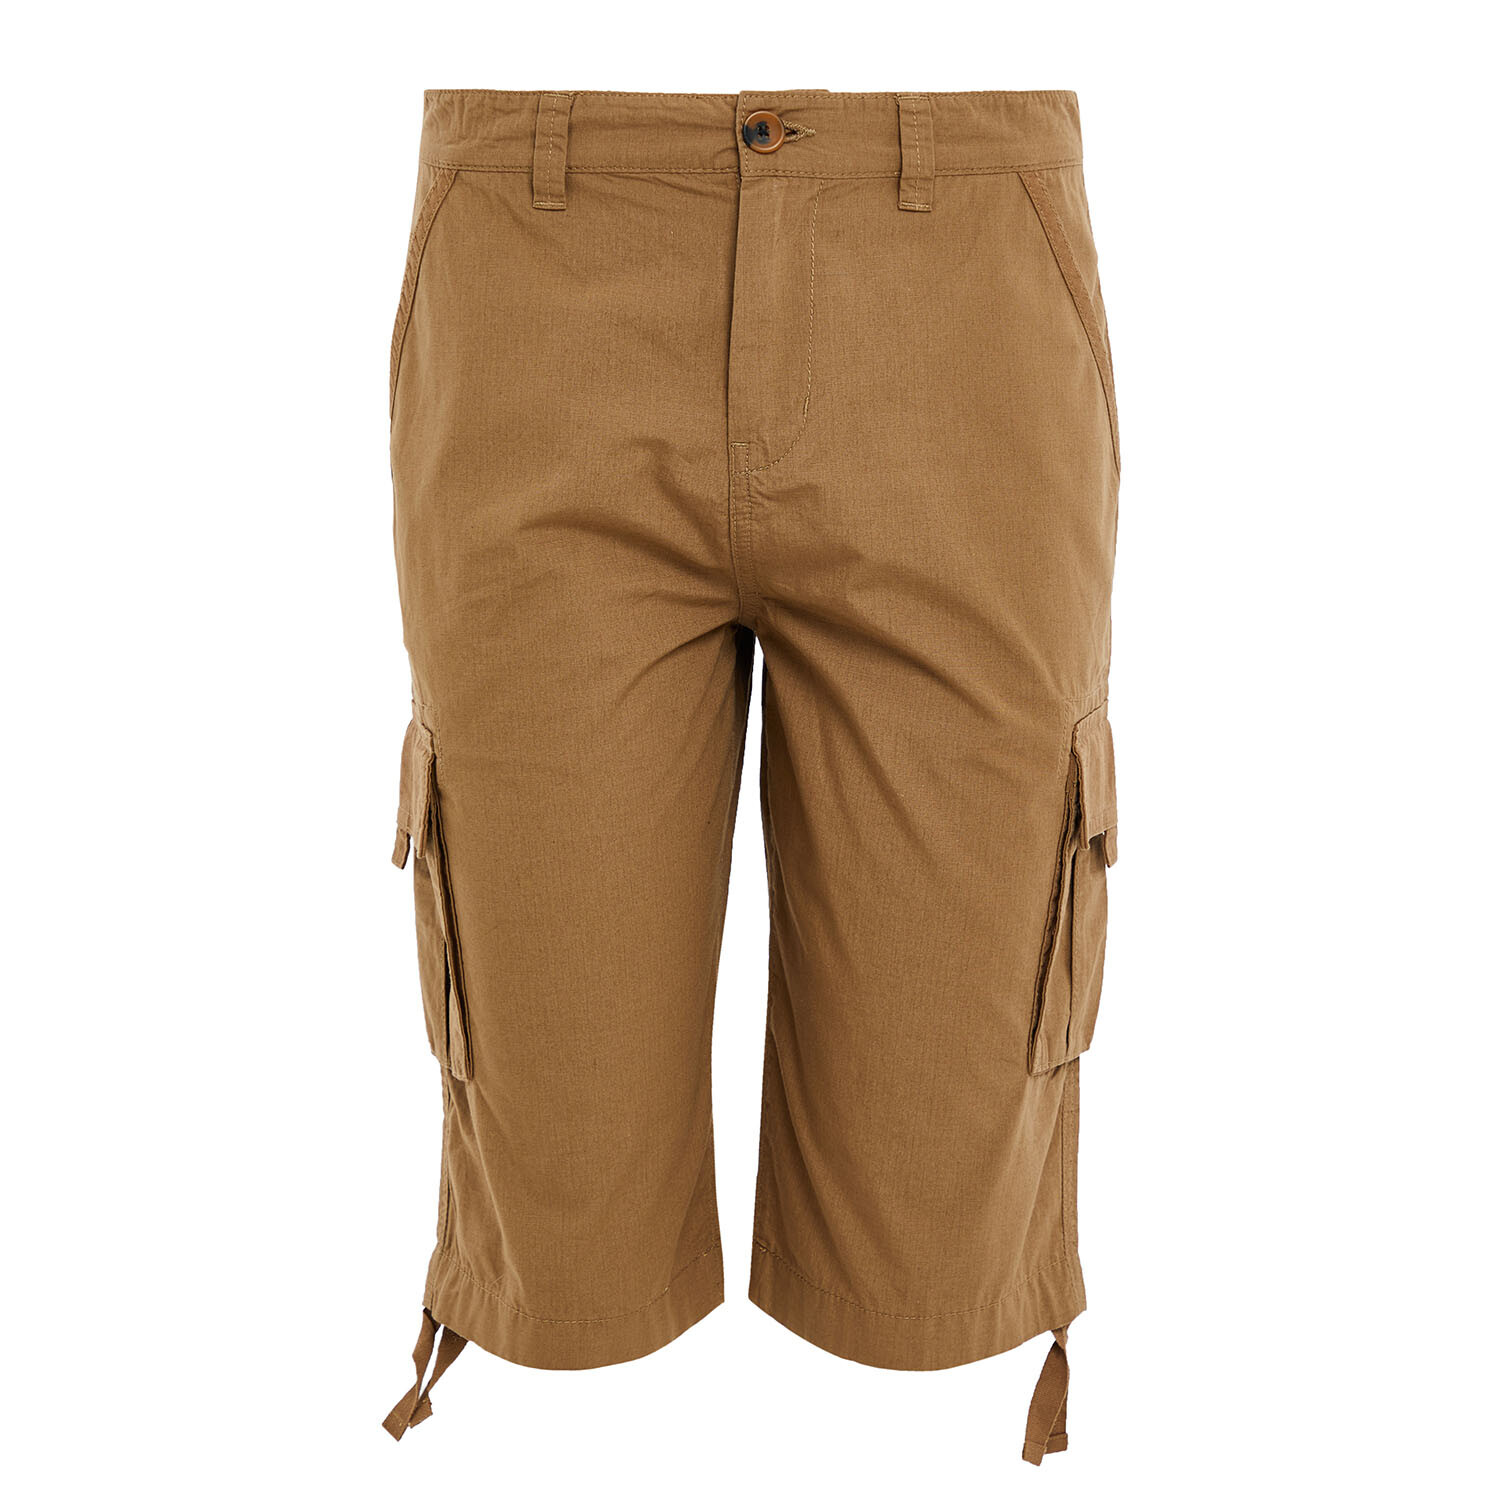 Men's 3/4 Length Shorts - Camel / L Image